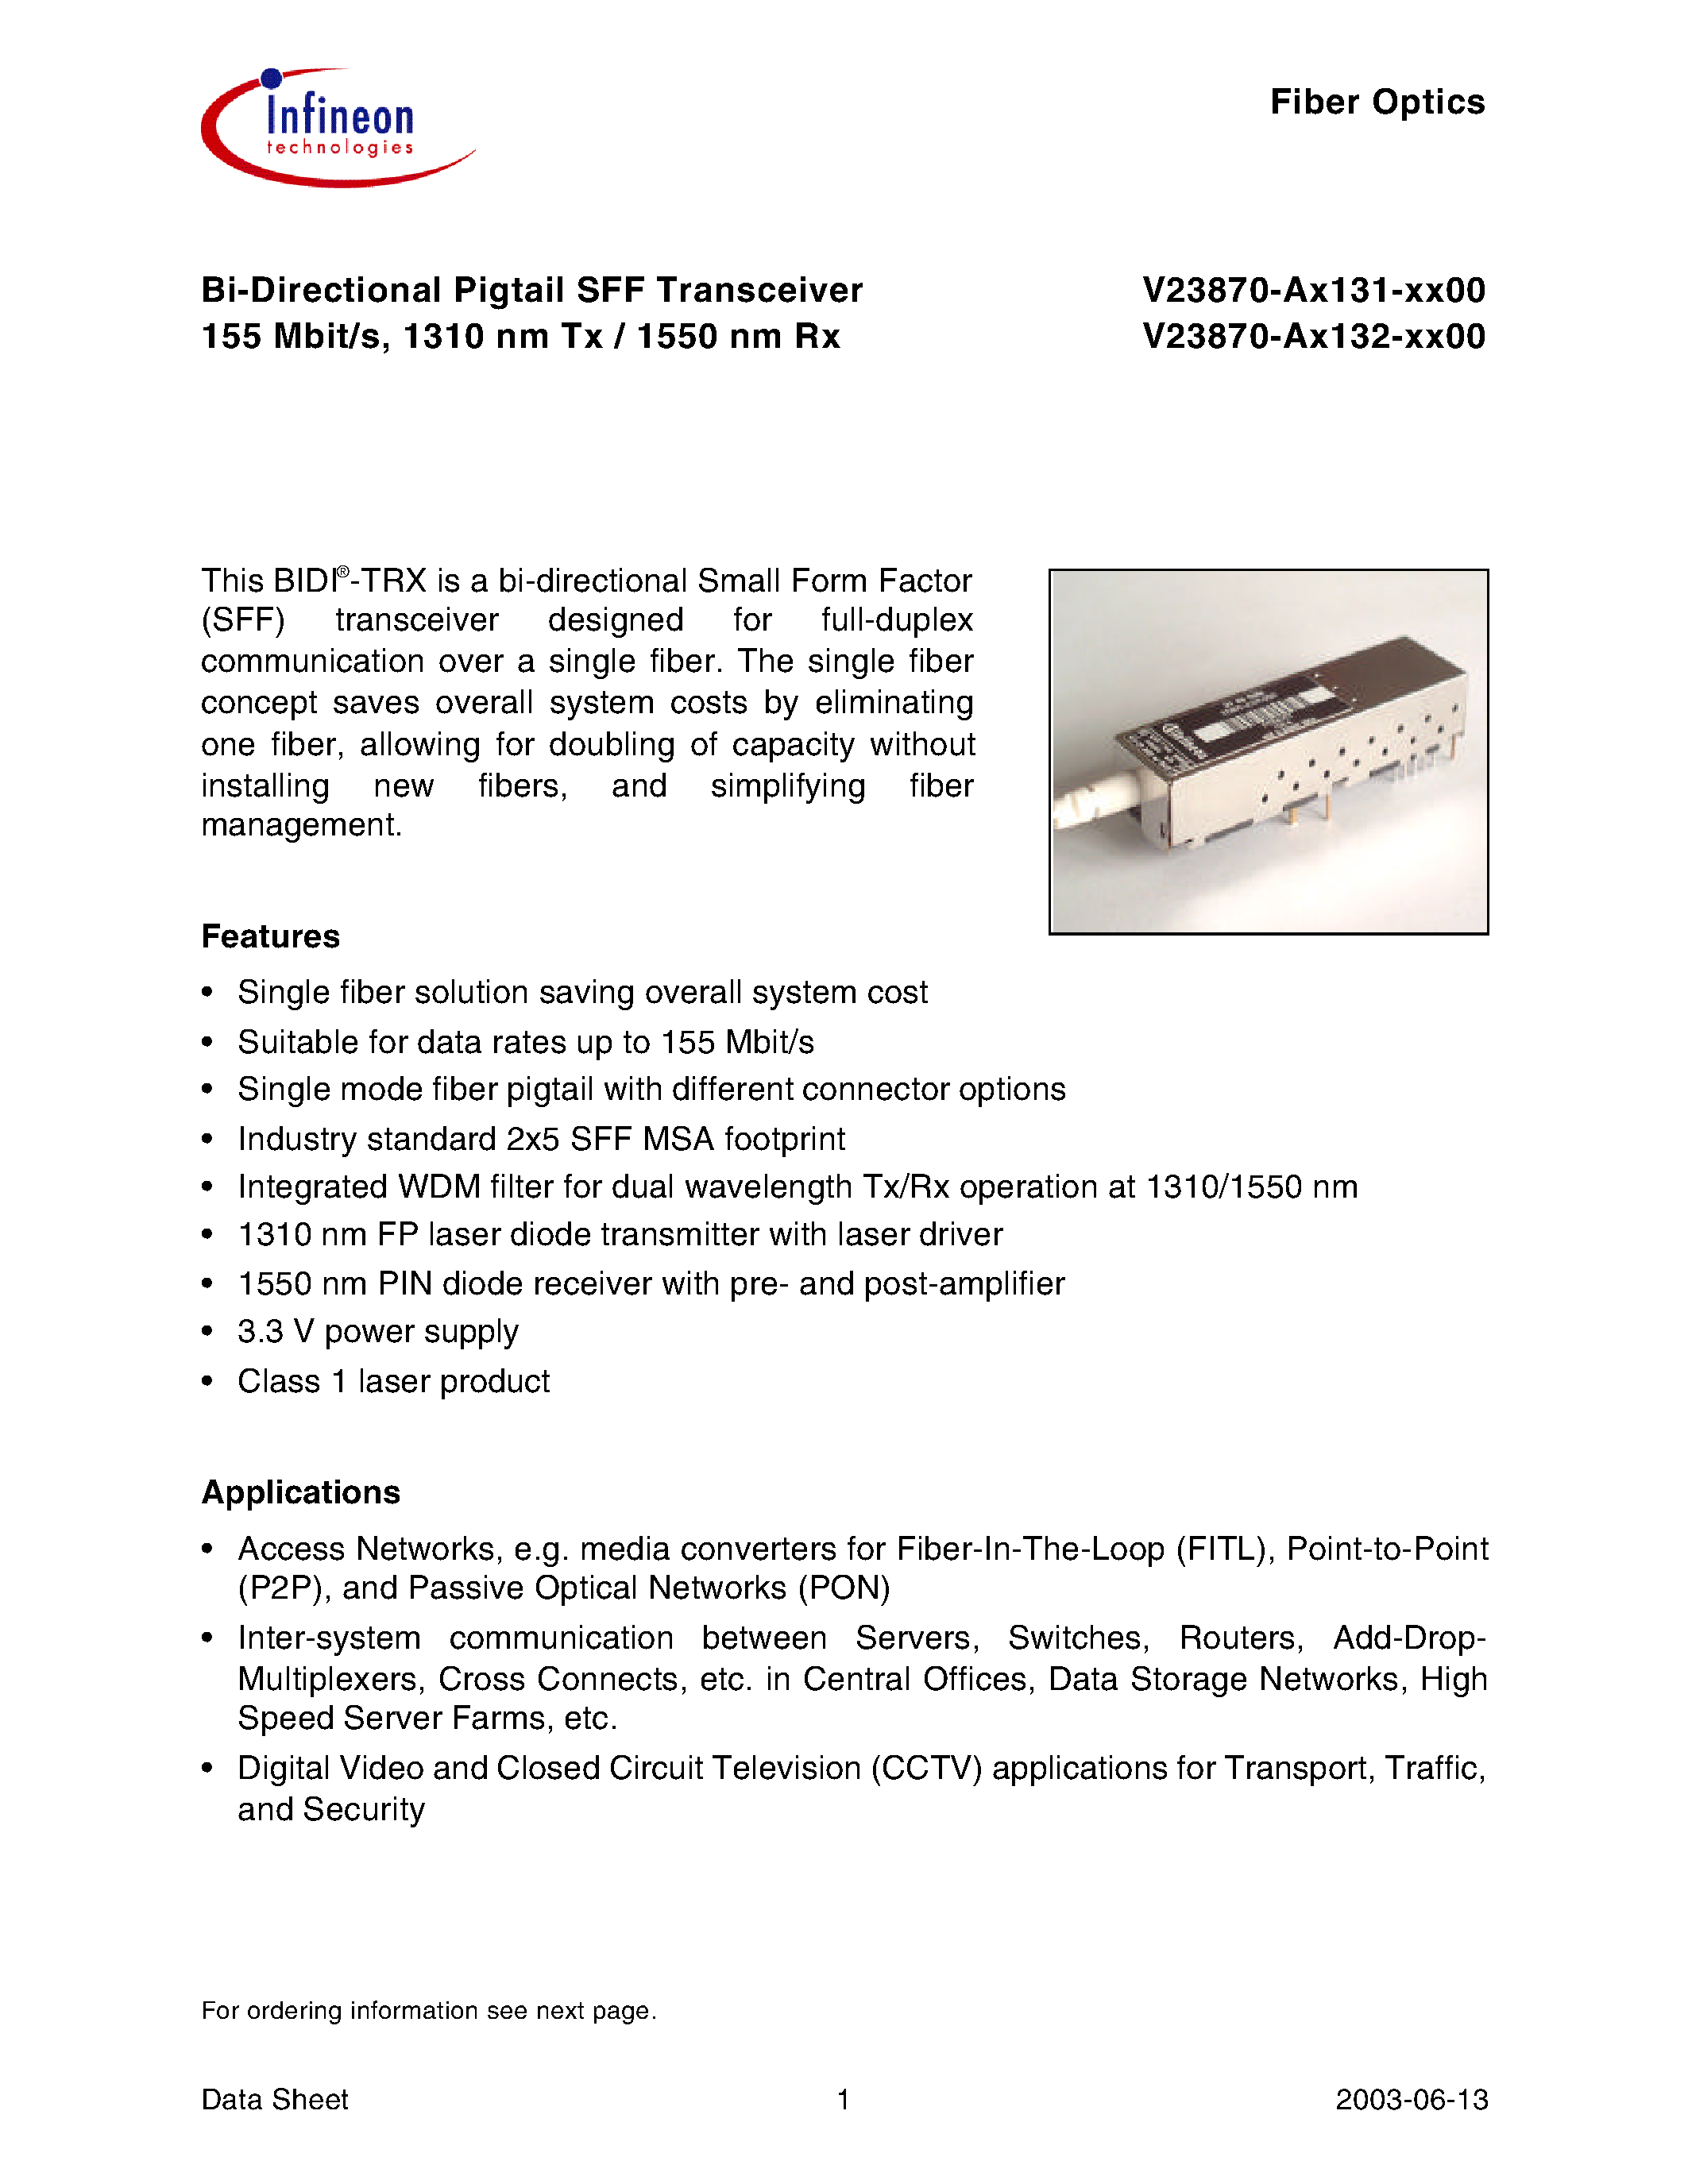 Даташит V23870-A3132-F500 - Bi-Directional Pigtail SFF Transceiver 155 Mbit/s/ 1310 nm Tx / 1550 nm Rx страница 1